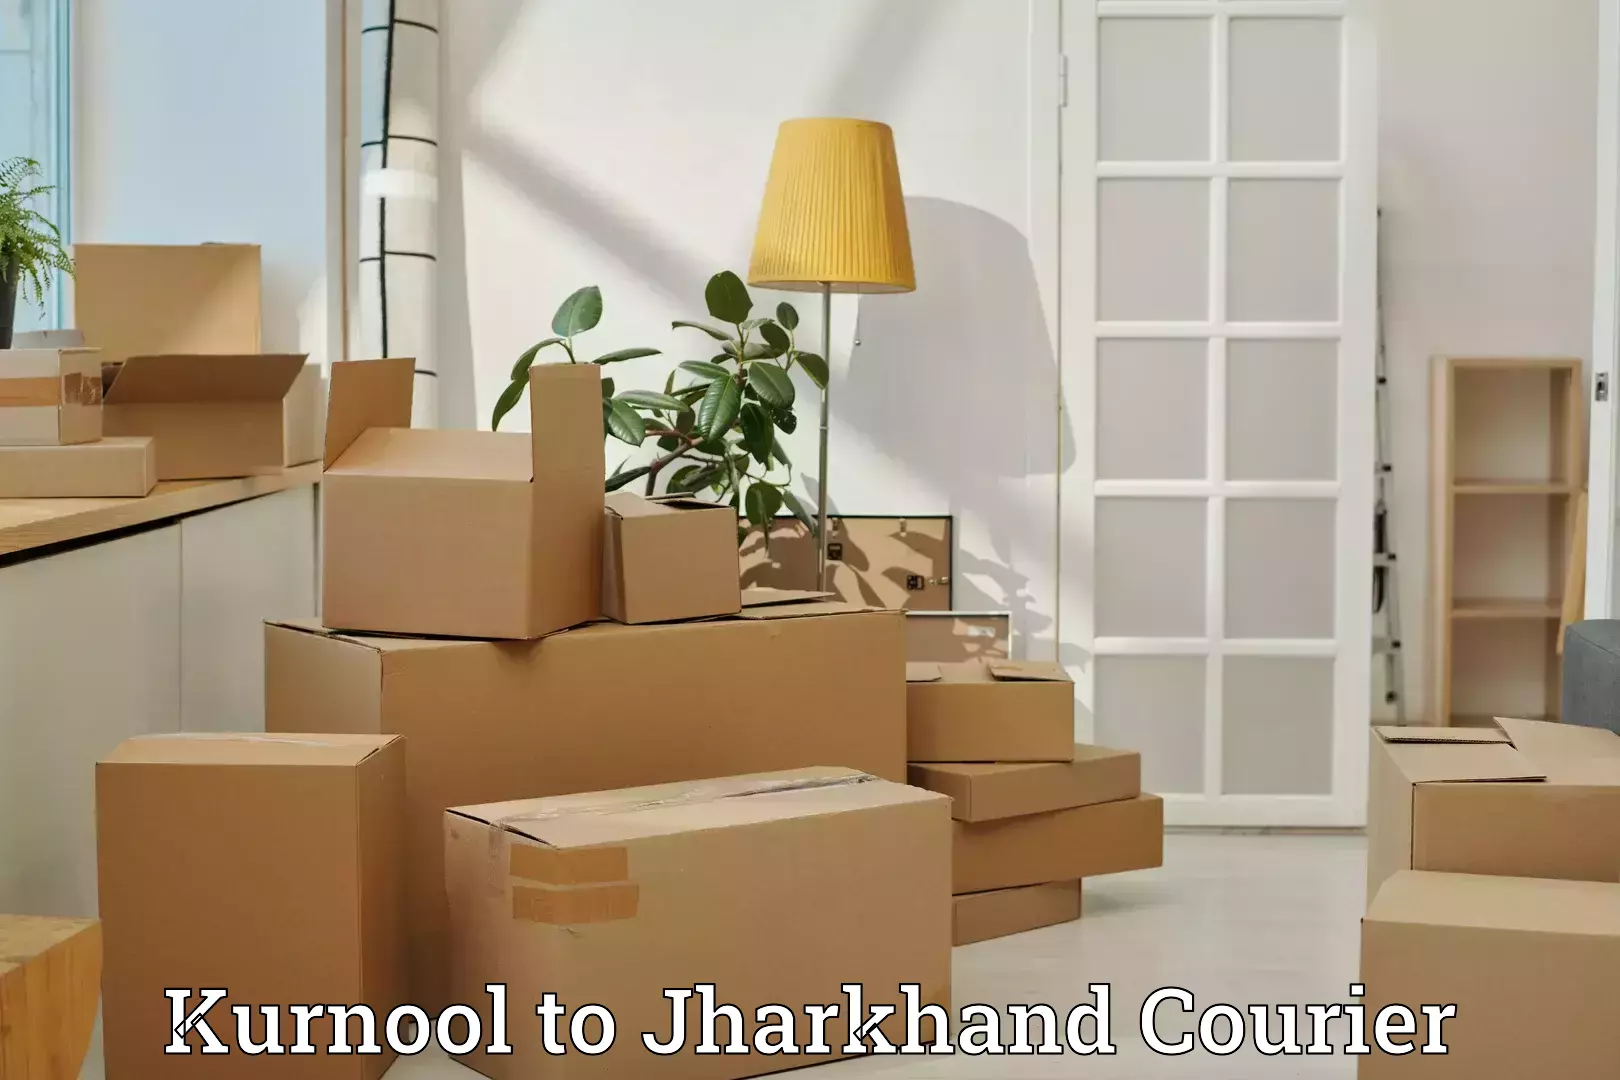 Luggage shipment specialists Kurnool to Jamshedpur